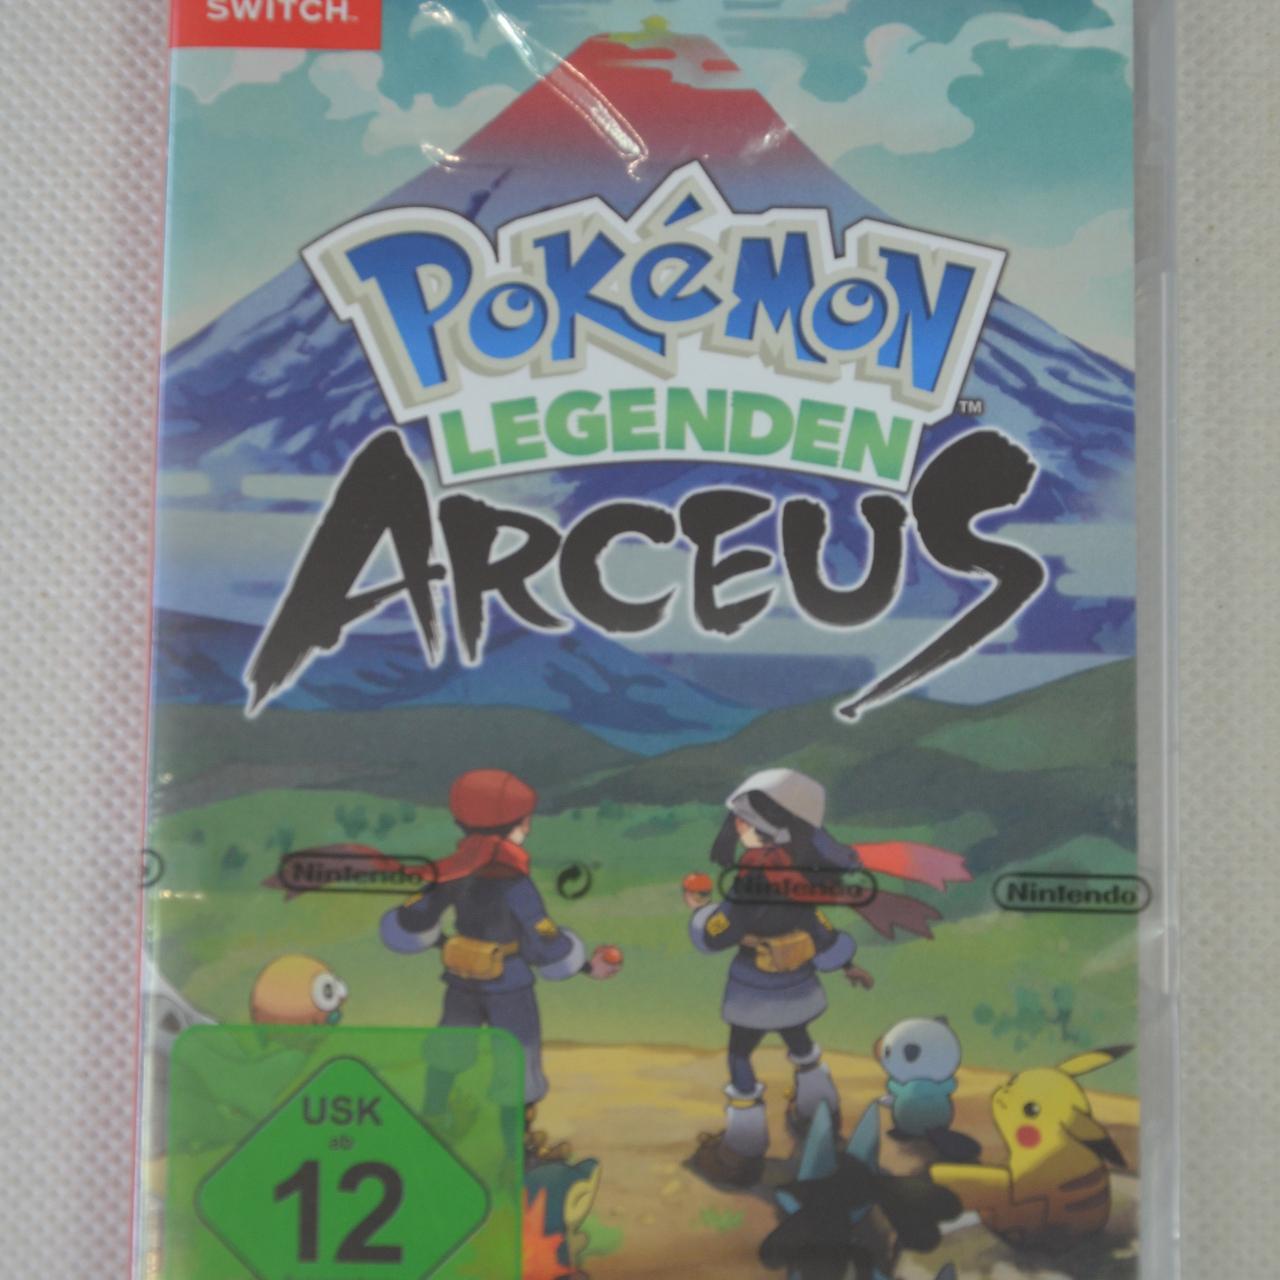 Pokemon Legends: Arceus for Switch